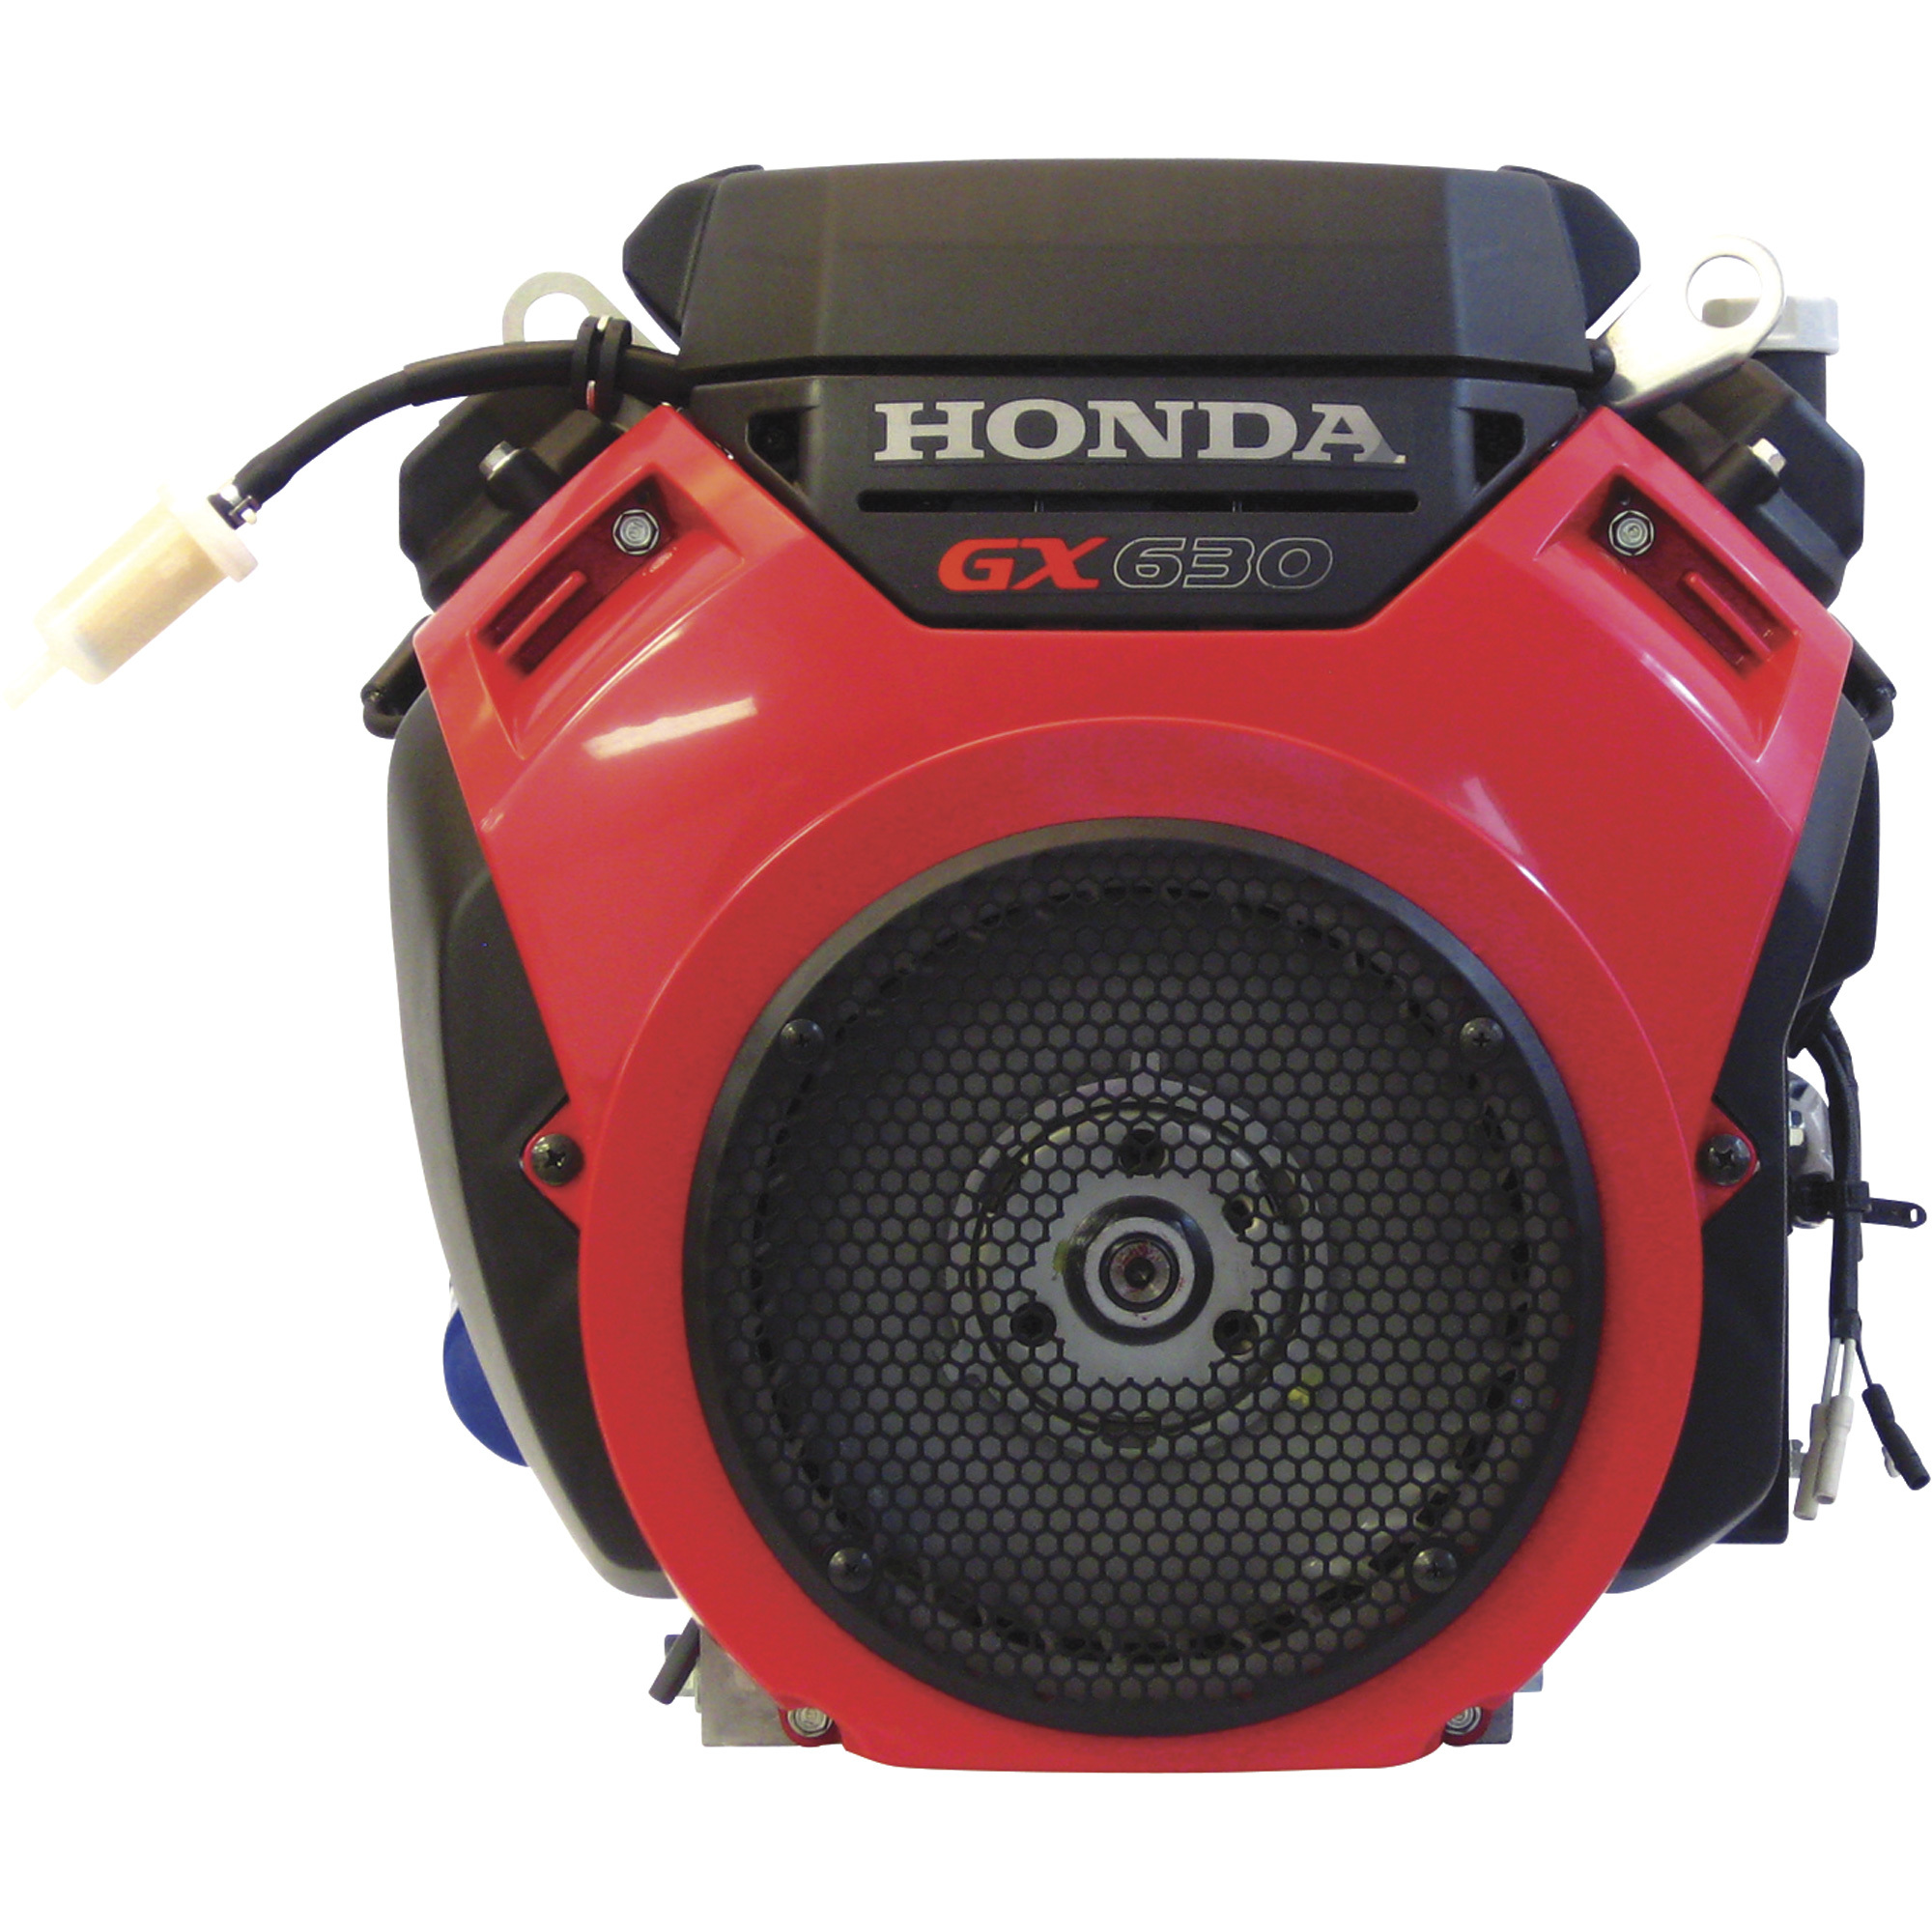 Honda V-Twin Horizontal OHV Engine with Electric Start â 688cc, GX Series, Model GX630RHQAF